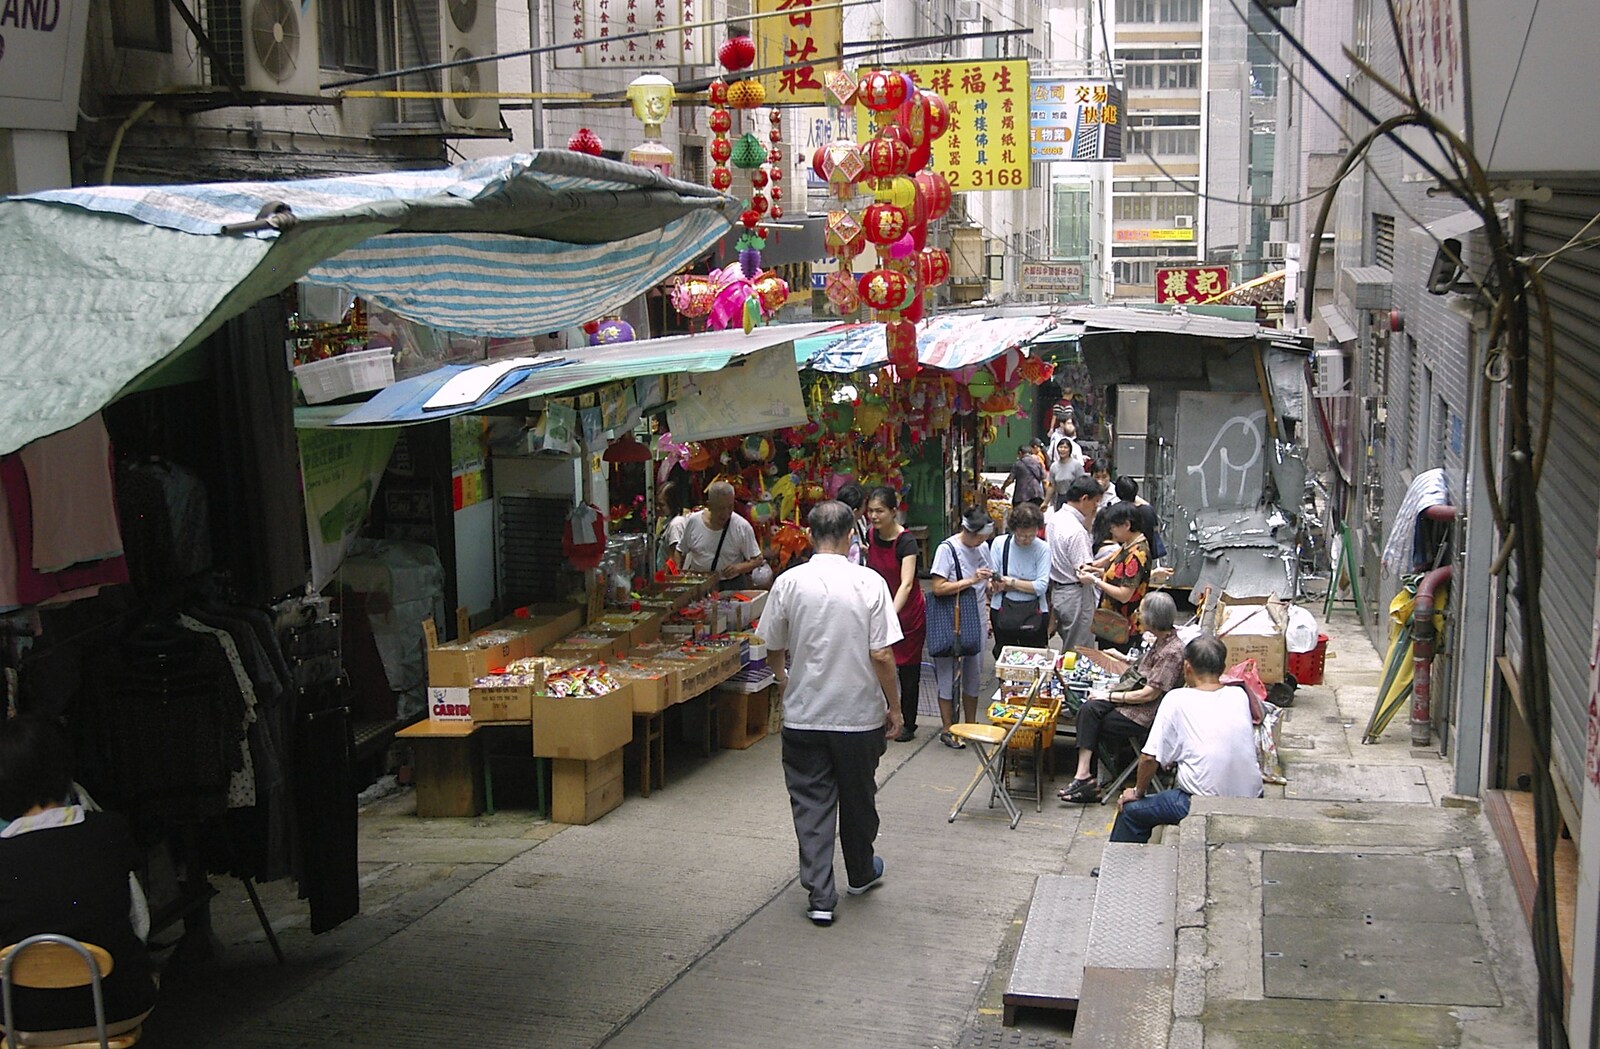 Walking around the market from Lan Kwai Fong Market, Hong Kong, China - 4th October 2006